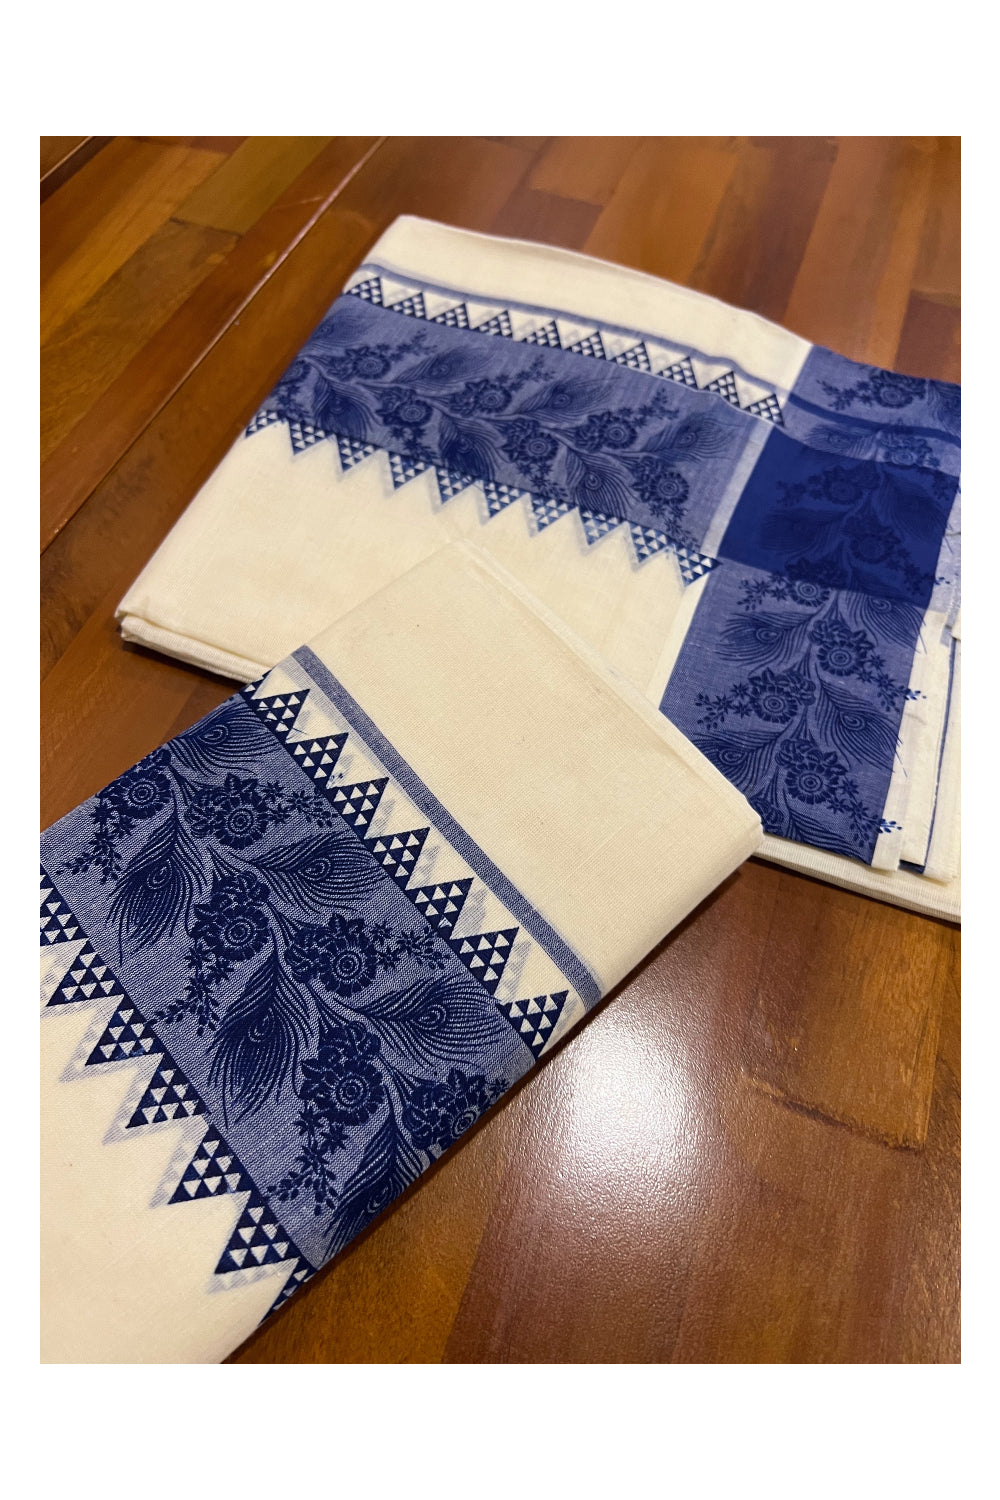 Kerala Cotton Set Mundu (Mundum Neriyathum) with Blue Feather Floral Temple Block Prints on Border